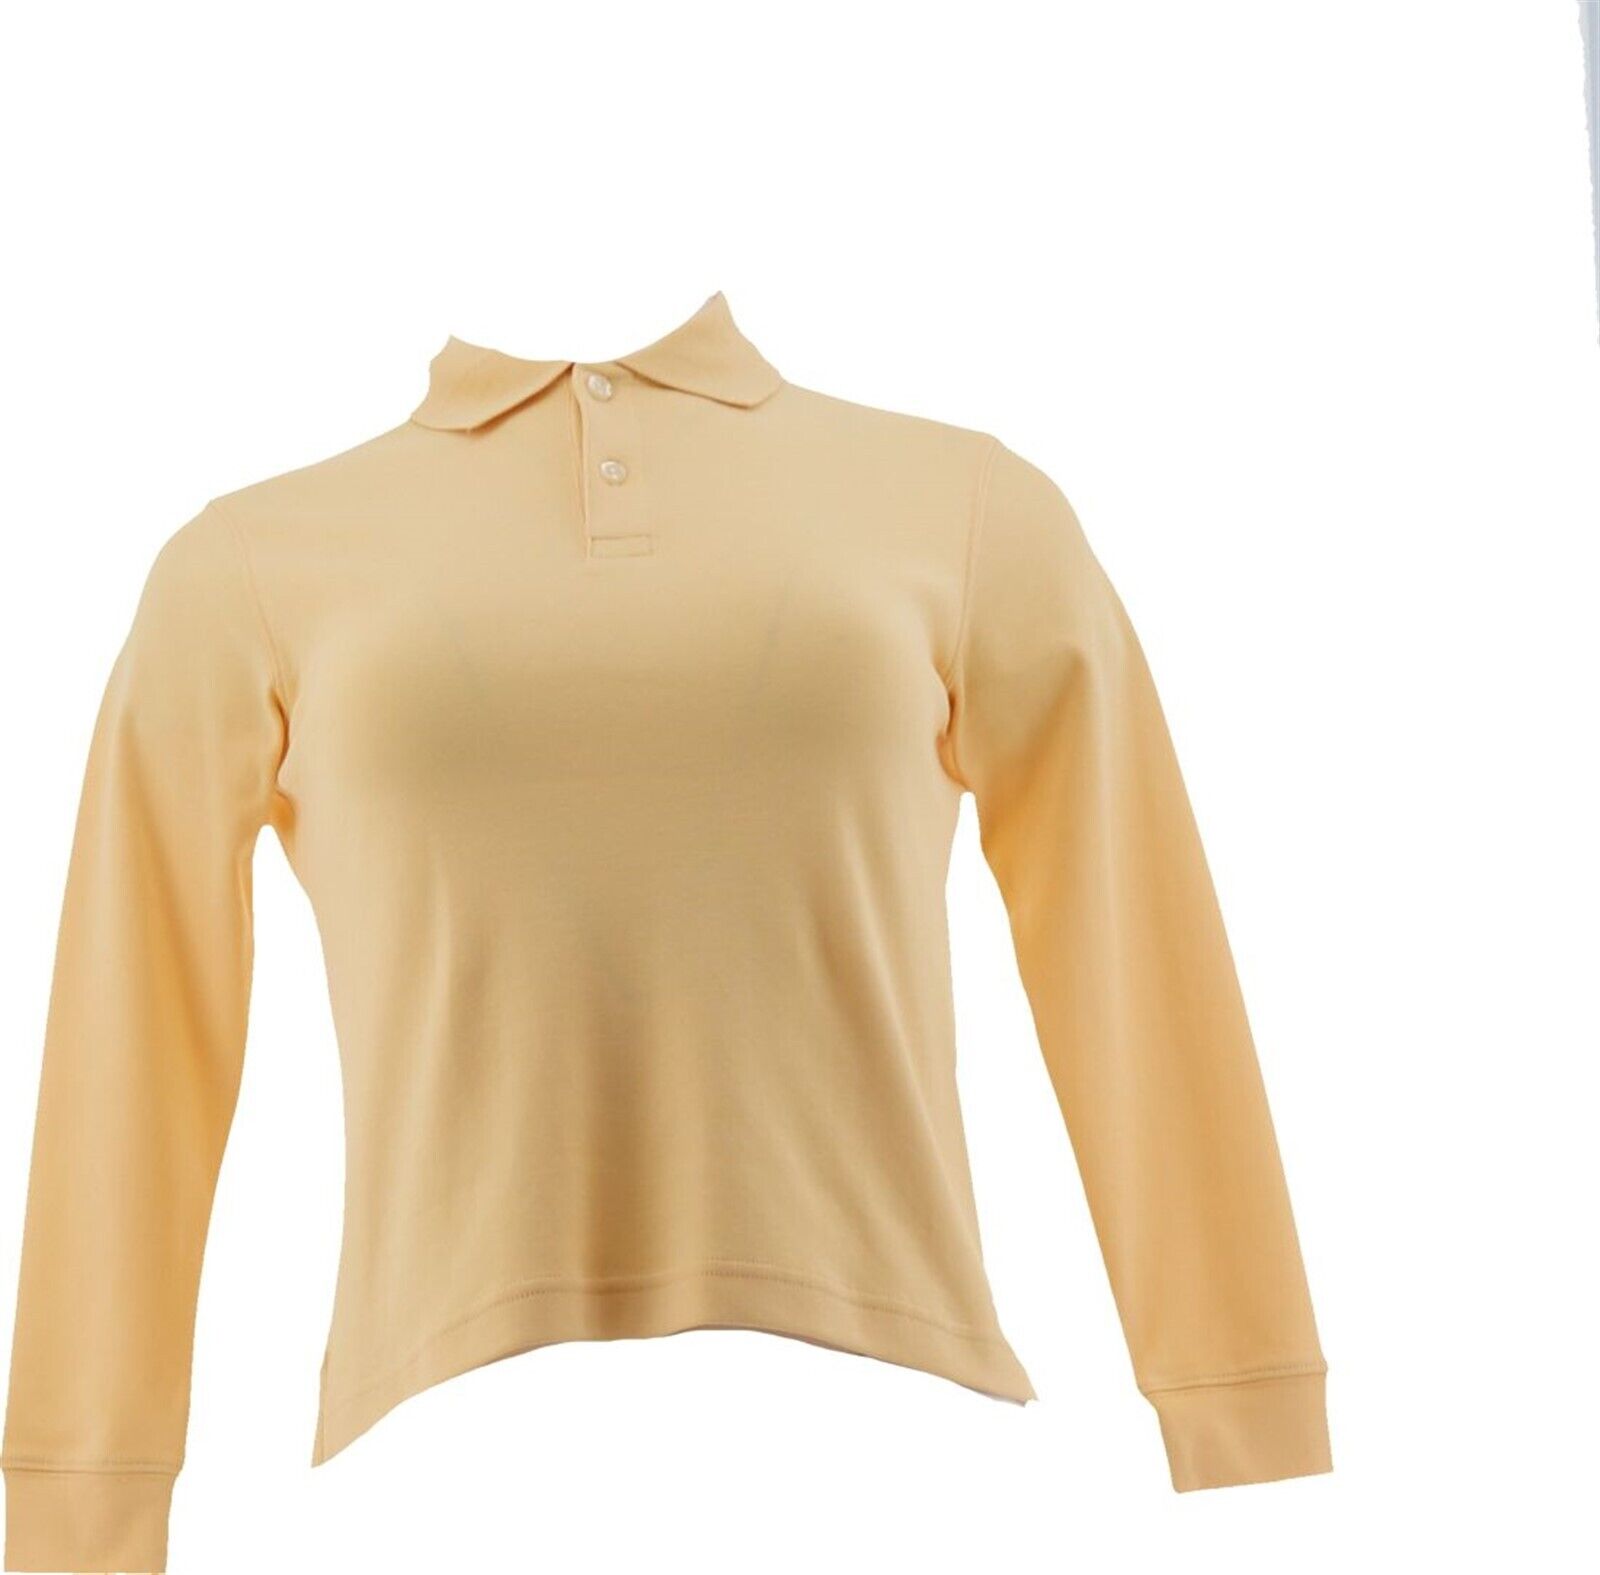 Lands' End School Uniform Kids Long Slv Interlock Polo Shirt Maize XL # 051369